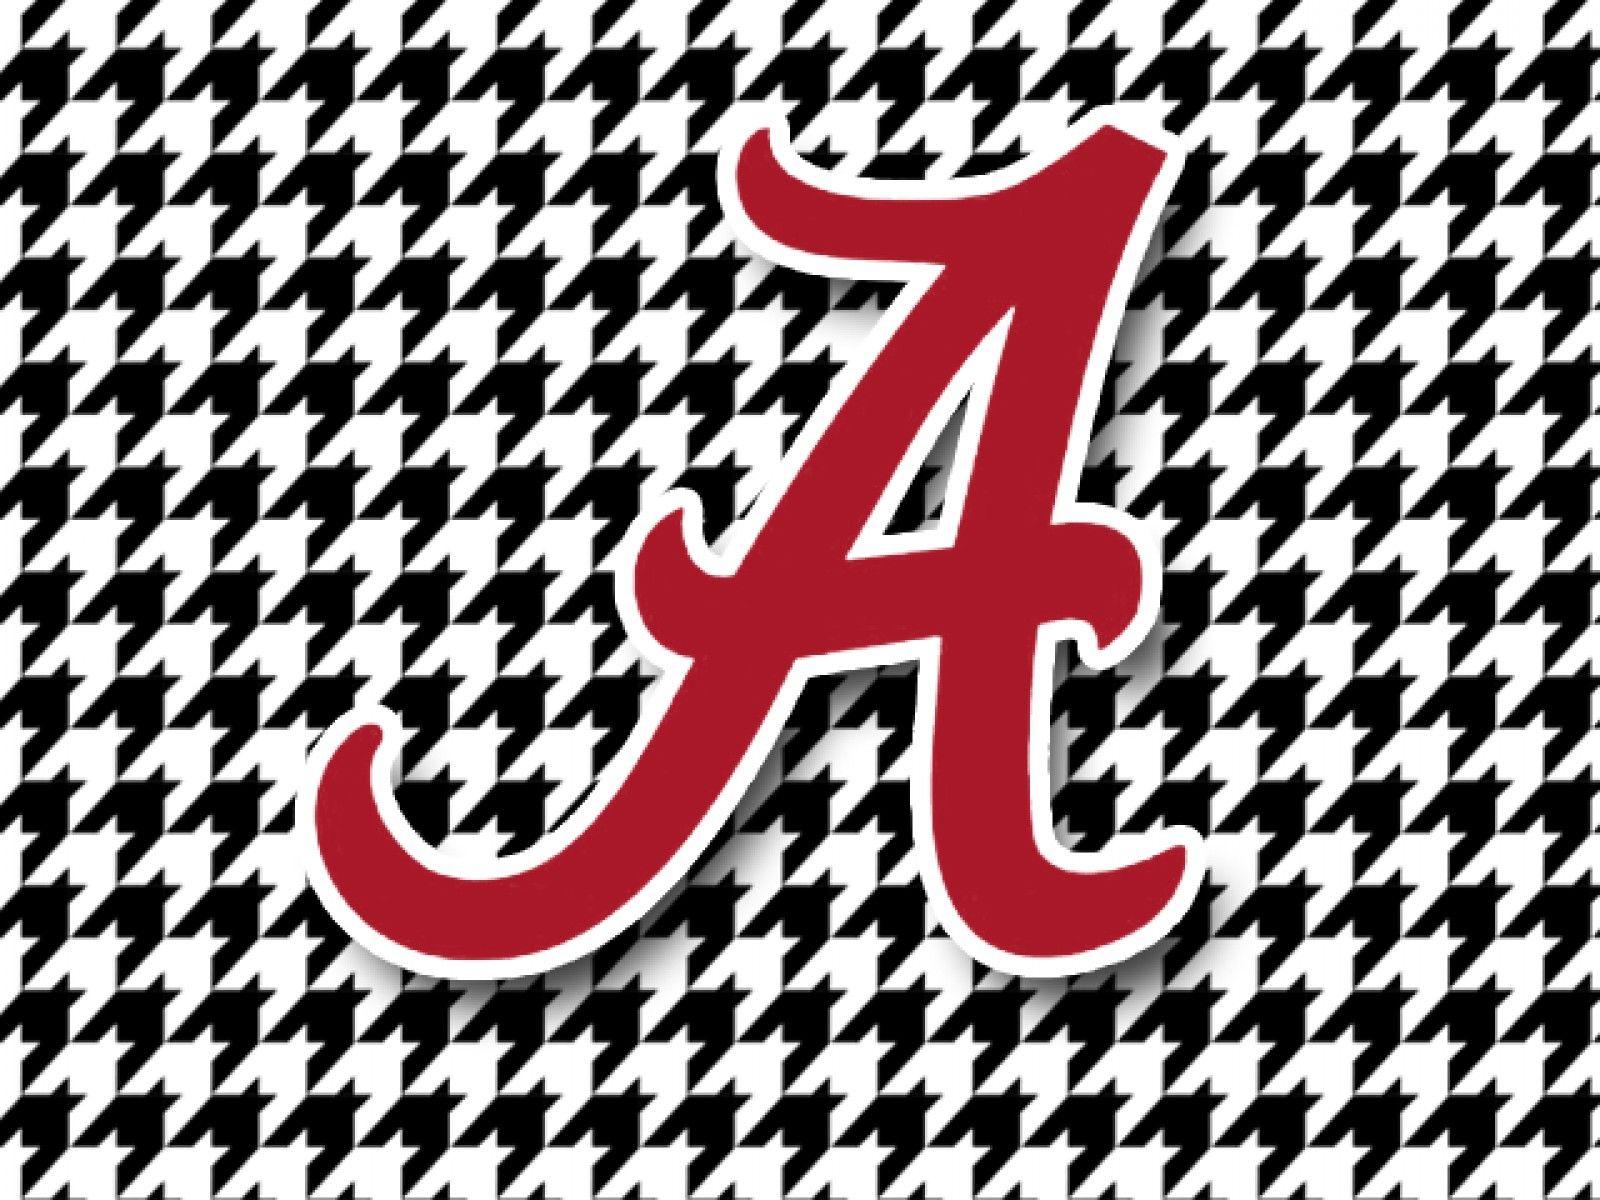 University of Alabama Football Logo - Alabama football Logos